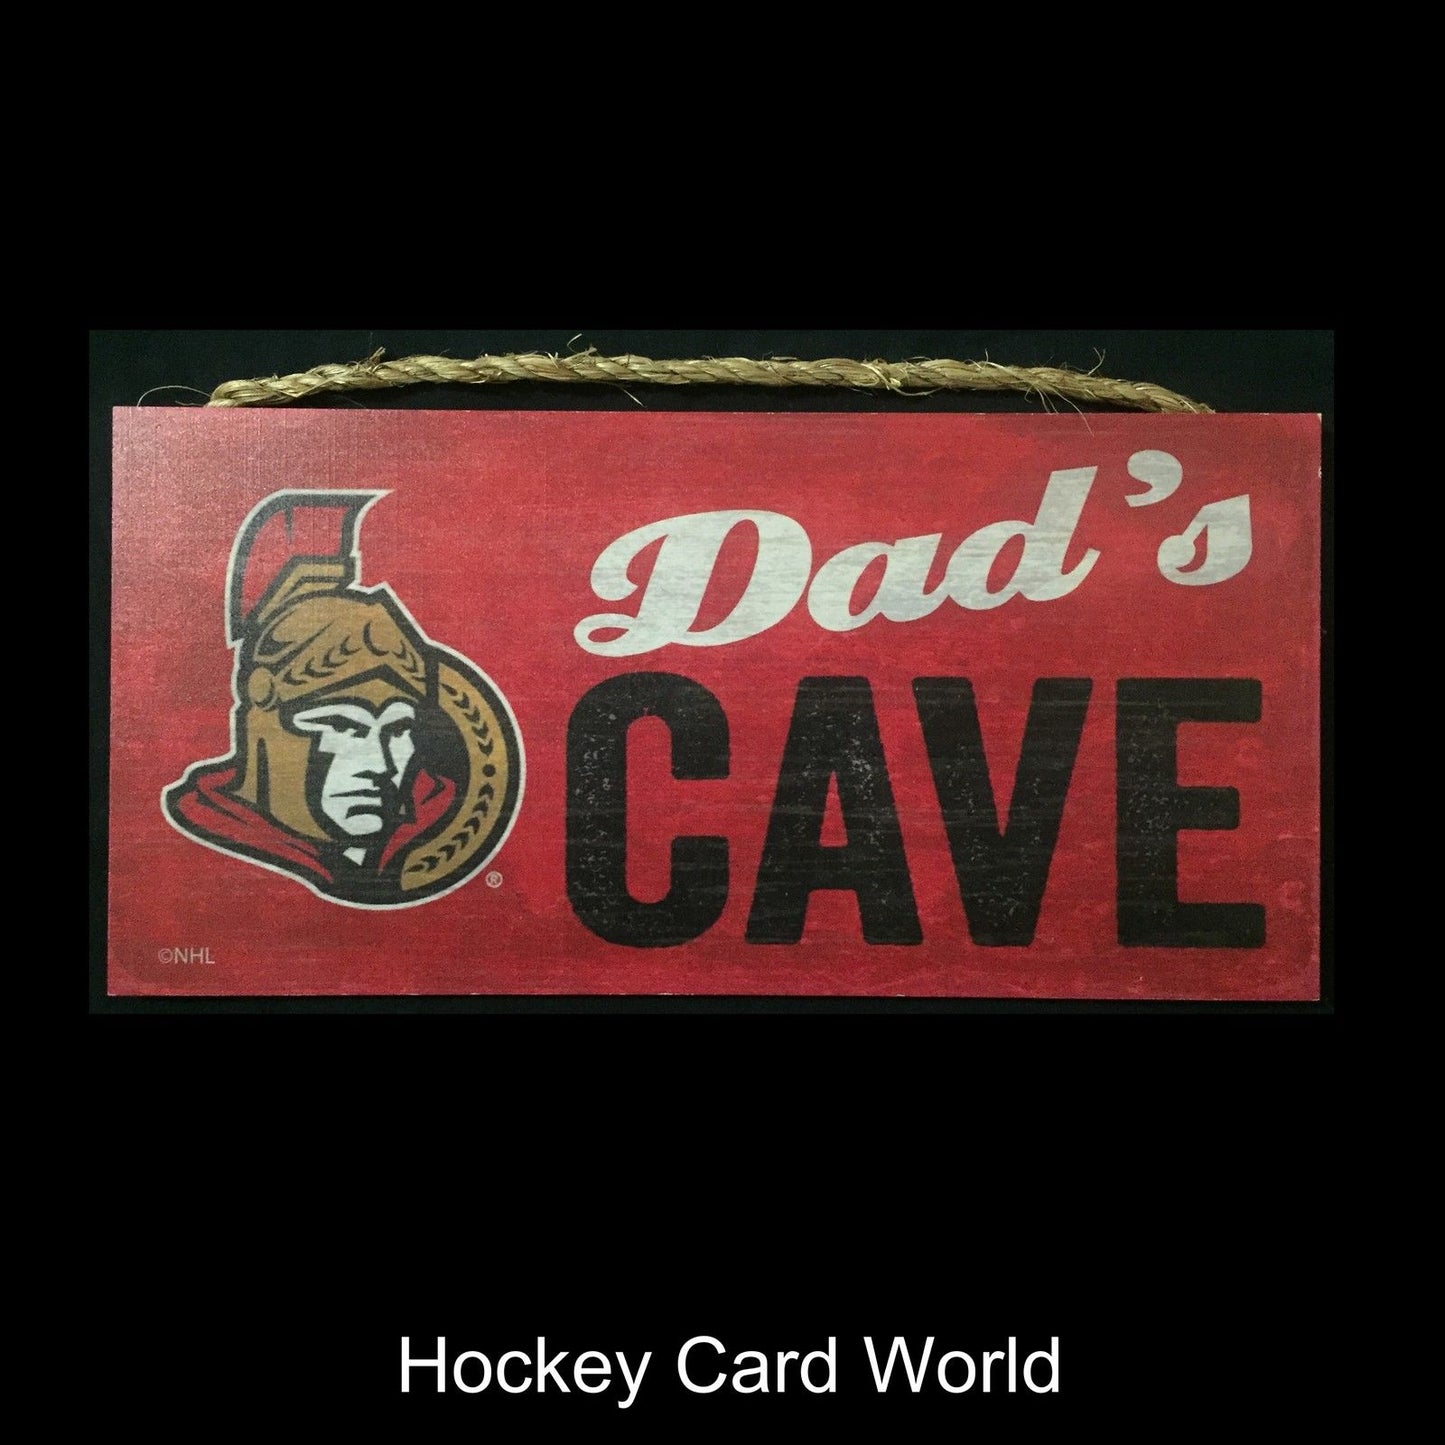  Ottawa Senators 6" x 12" Wooden "Dads Cave" Sign NHL Official Licensed Image 1